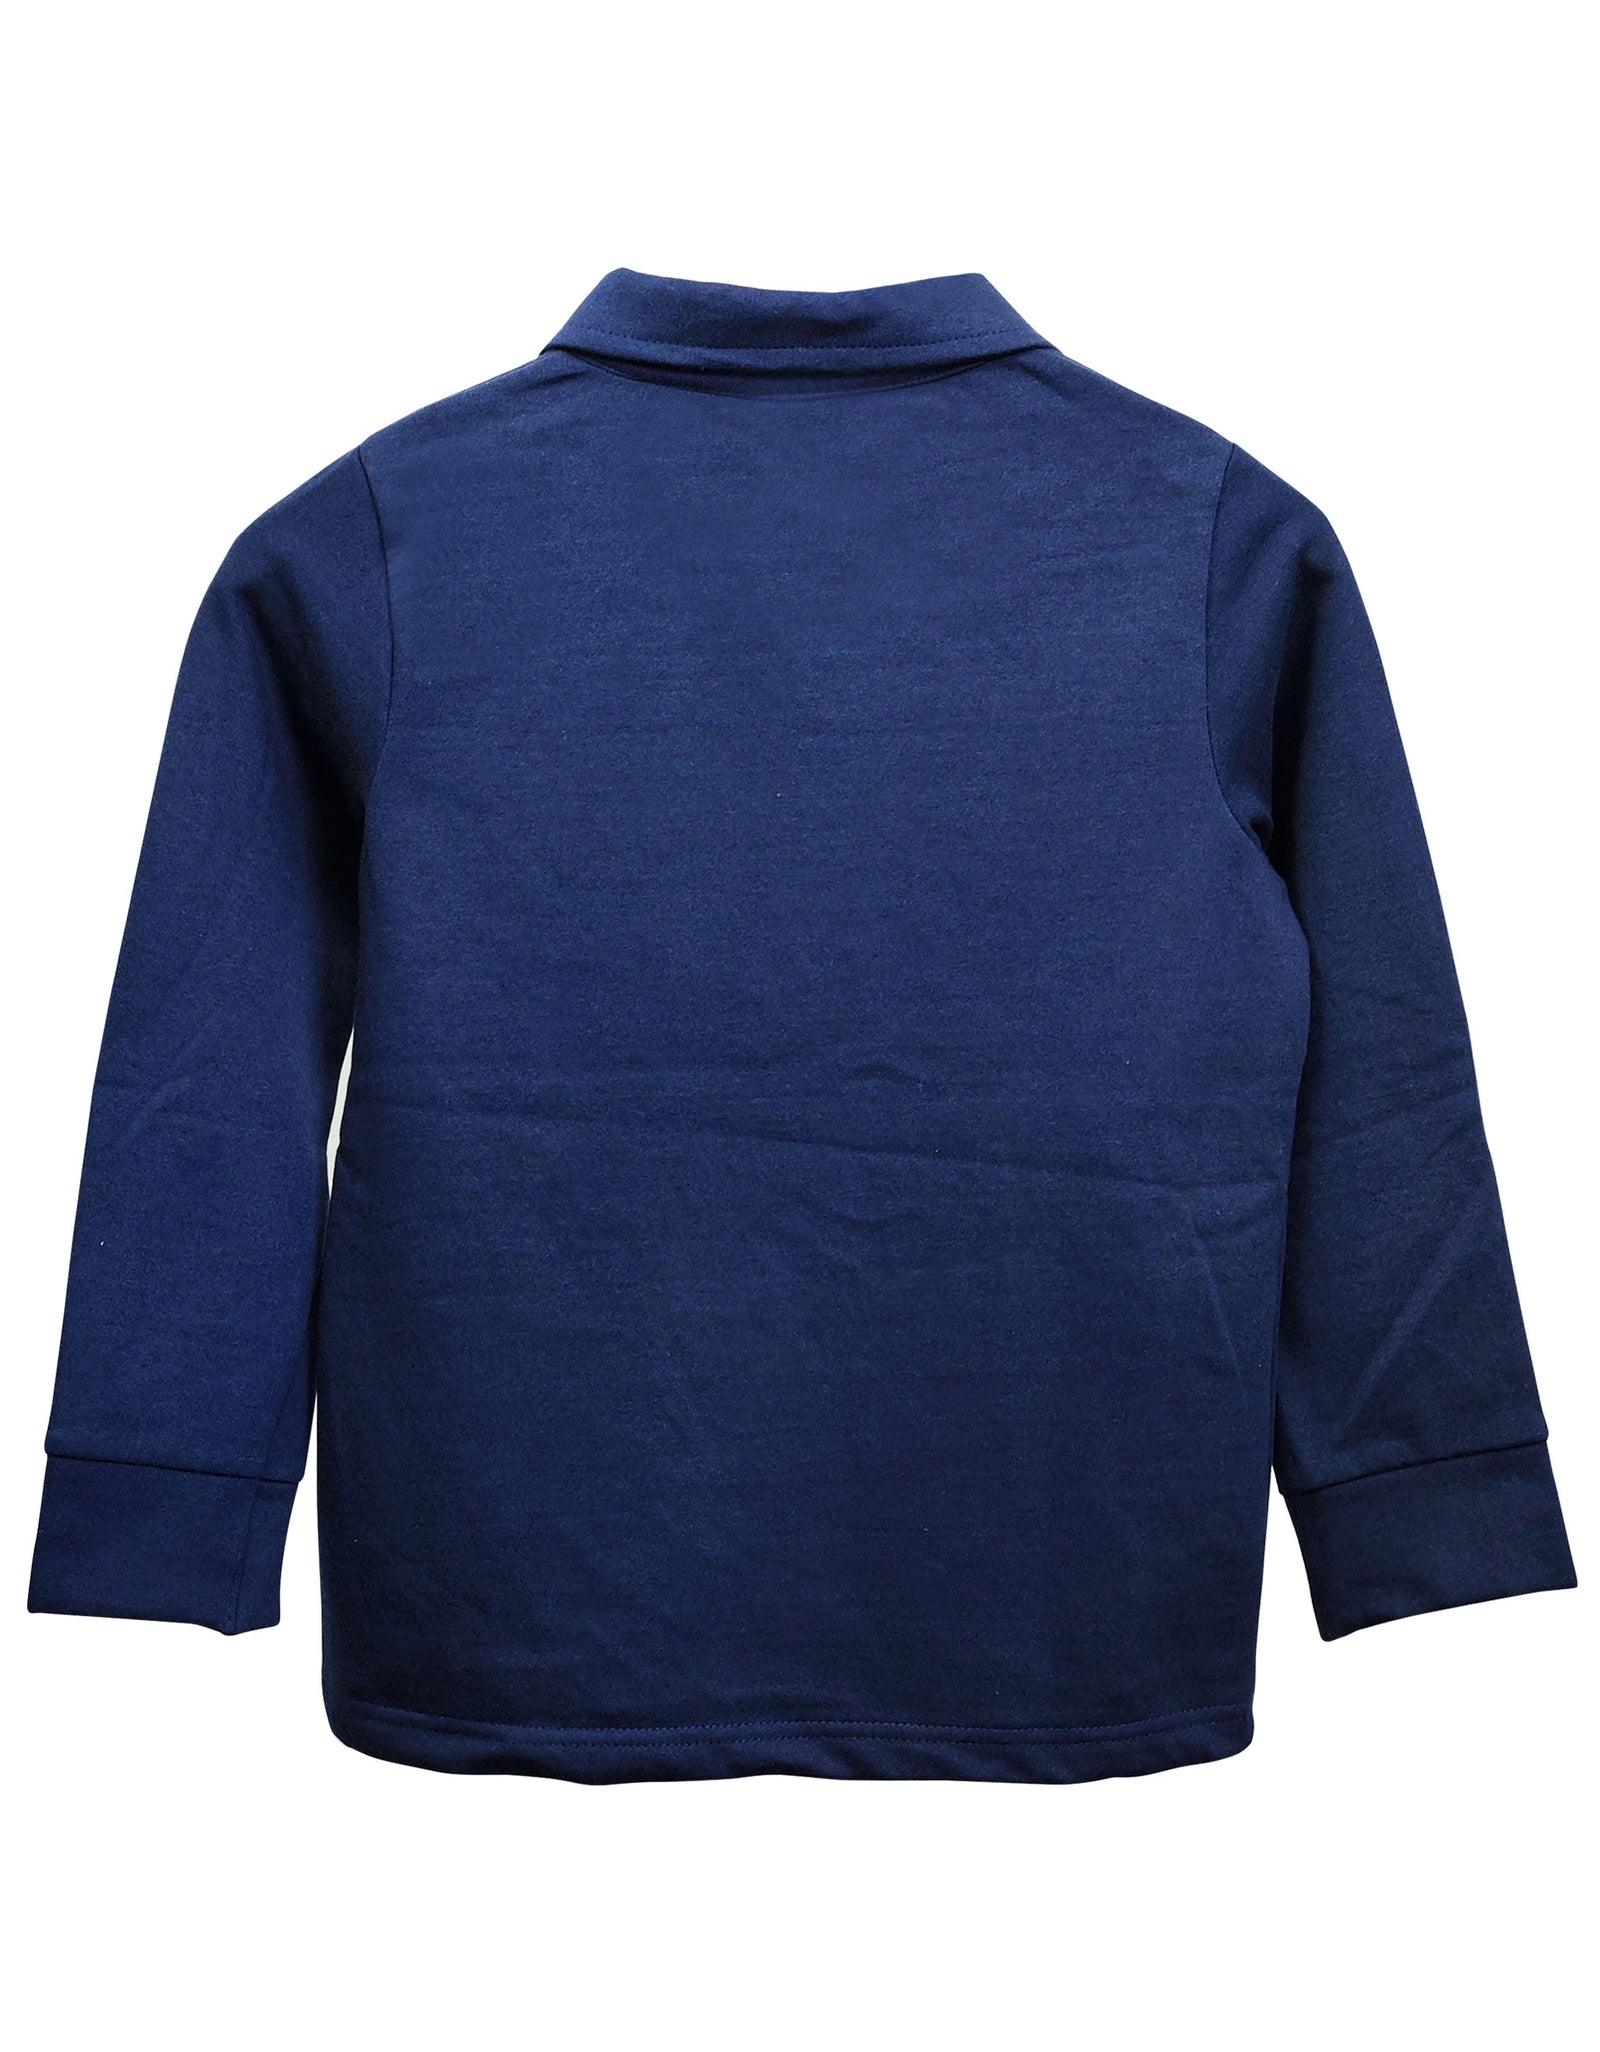 Sweatshirt for Kids  - Navy Blue